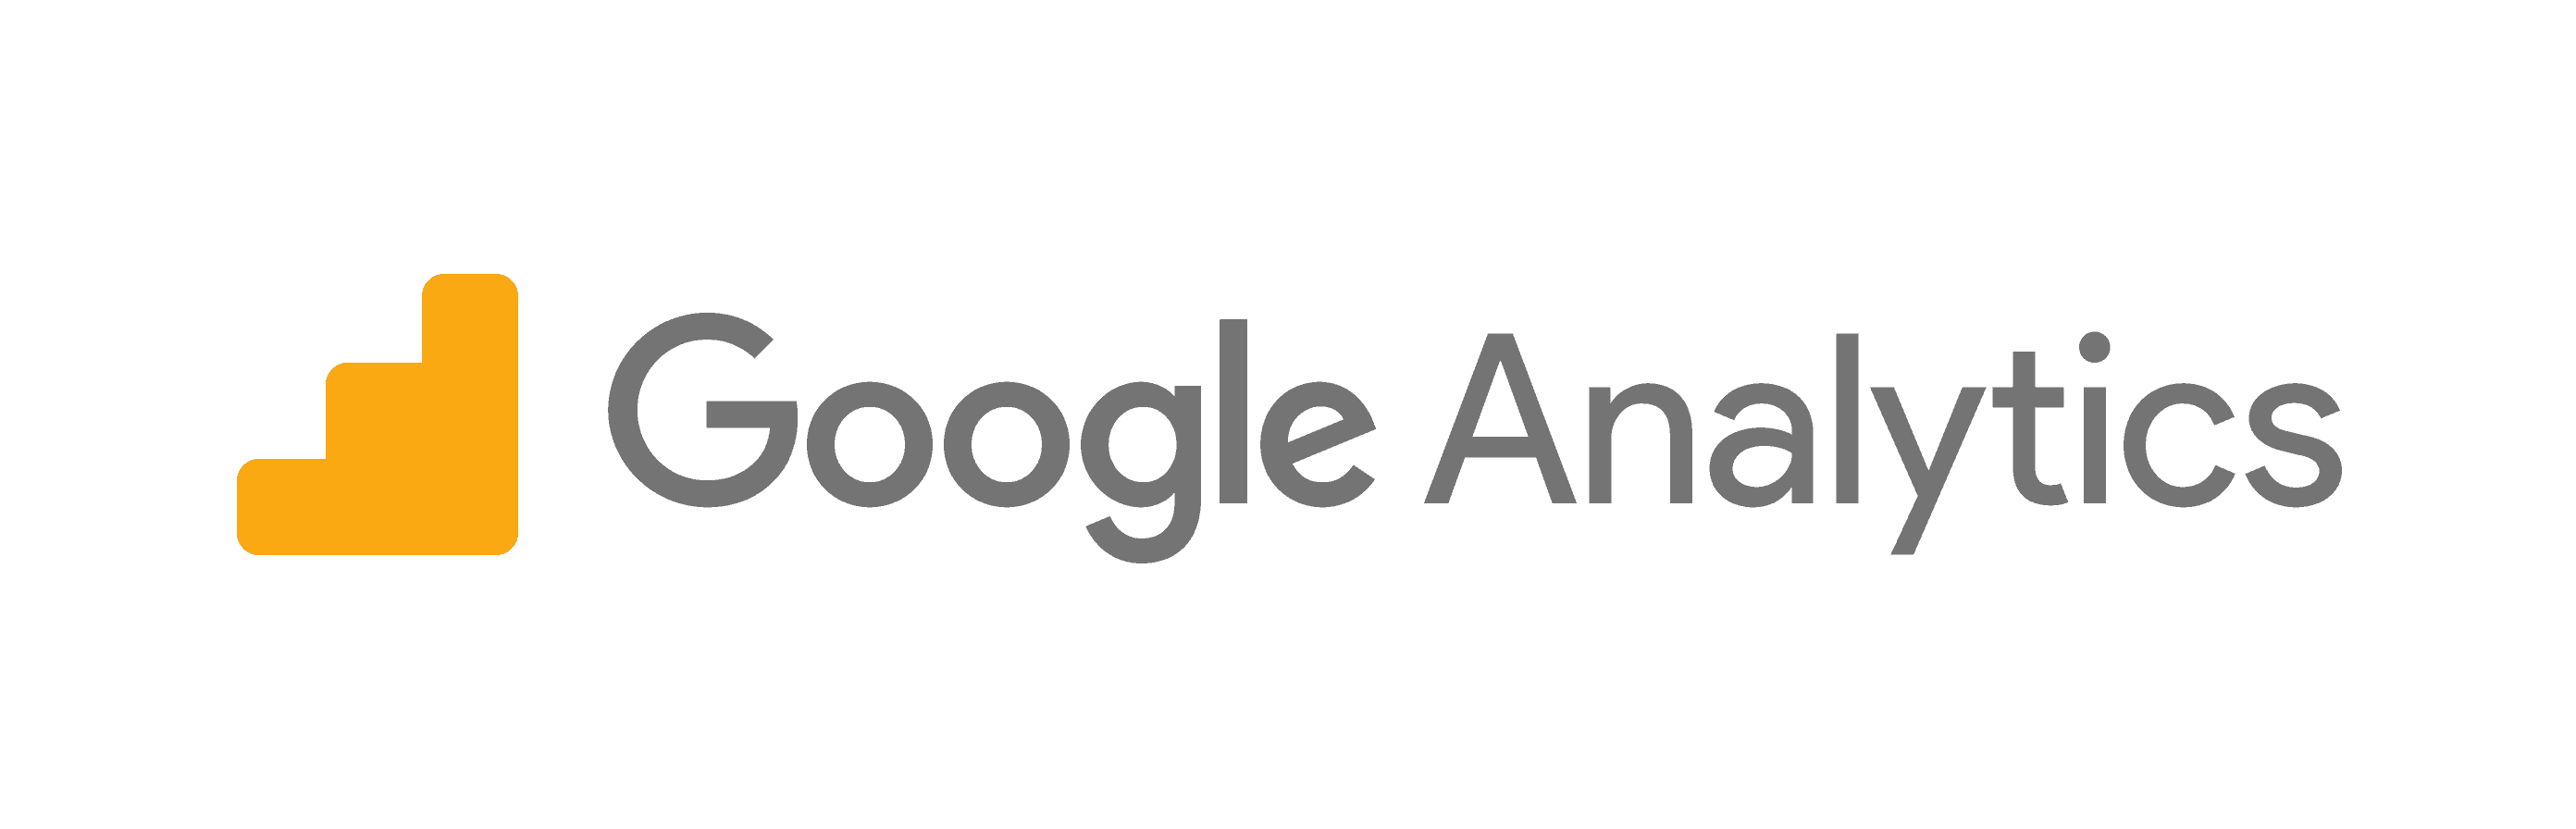 google analytics logo Chicago Website Design SEO Company